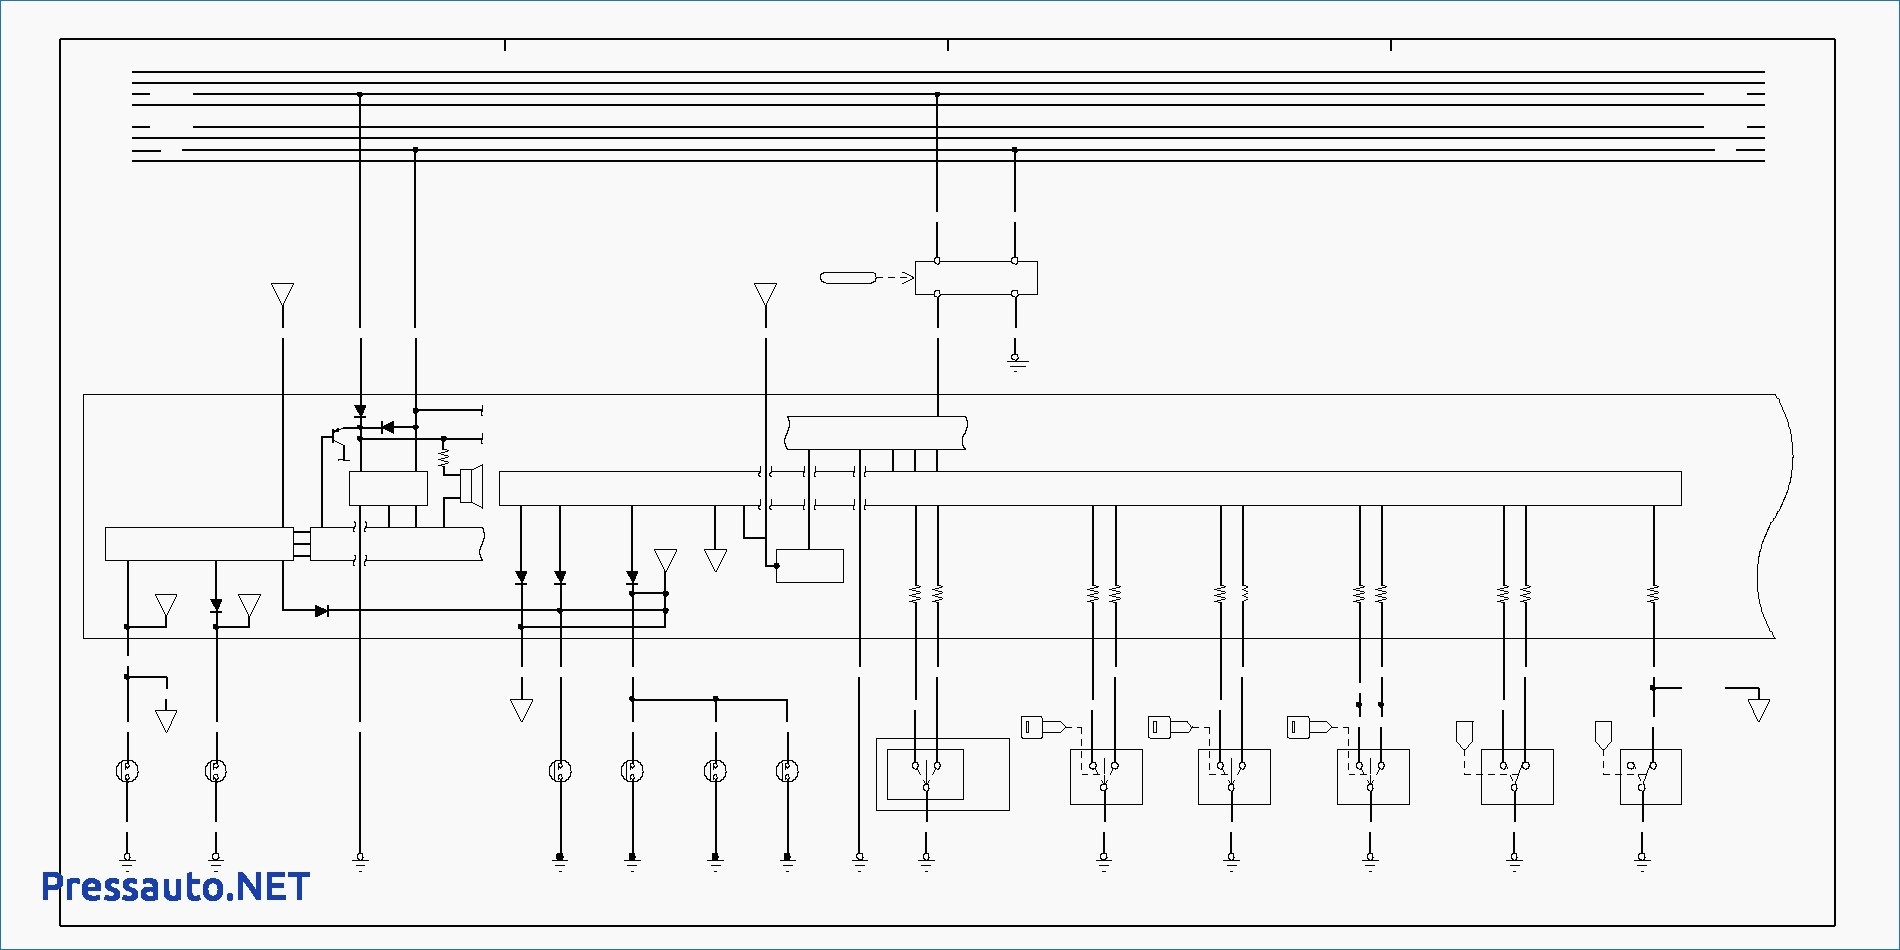 bbbind wiring diagram Collection Bbbind Wiring Diagram 14 t